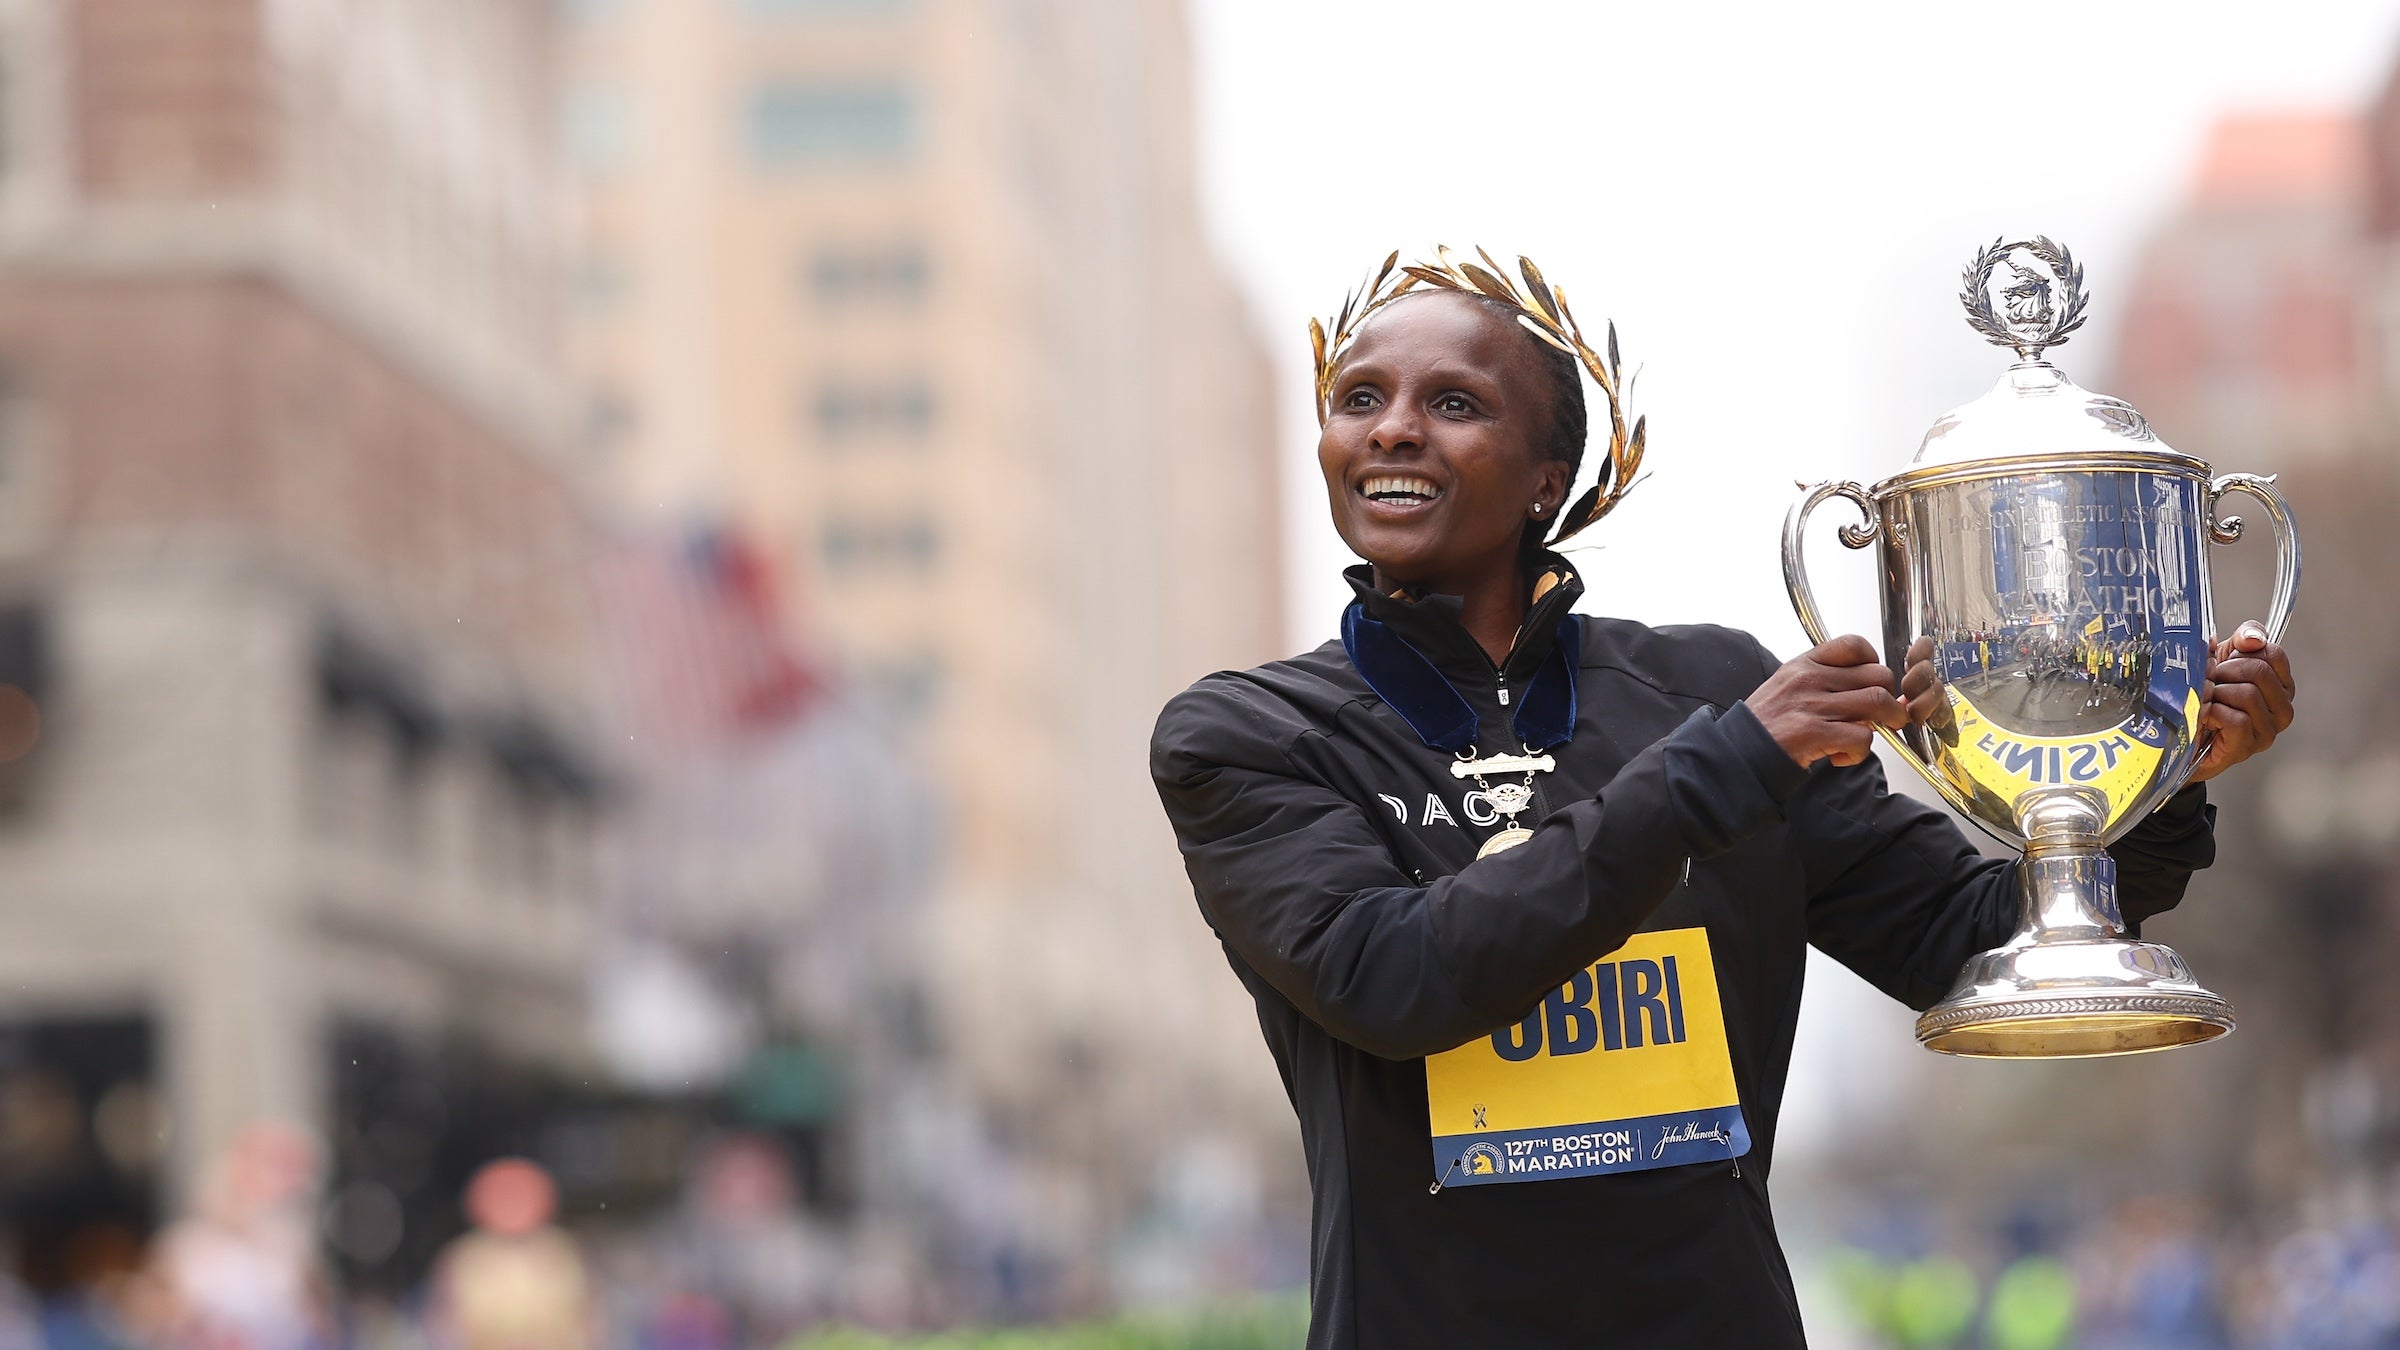 Zdeno Chara, wearing bib number 3333, completes Boston Marathon in 3:38:23